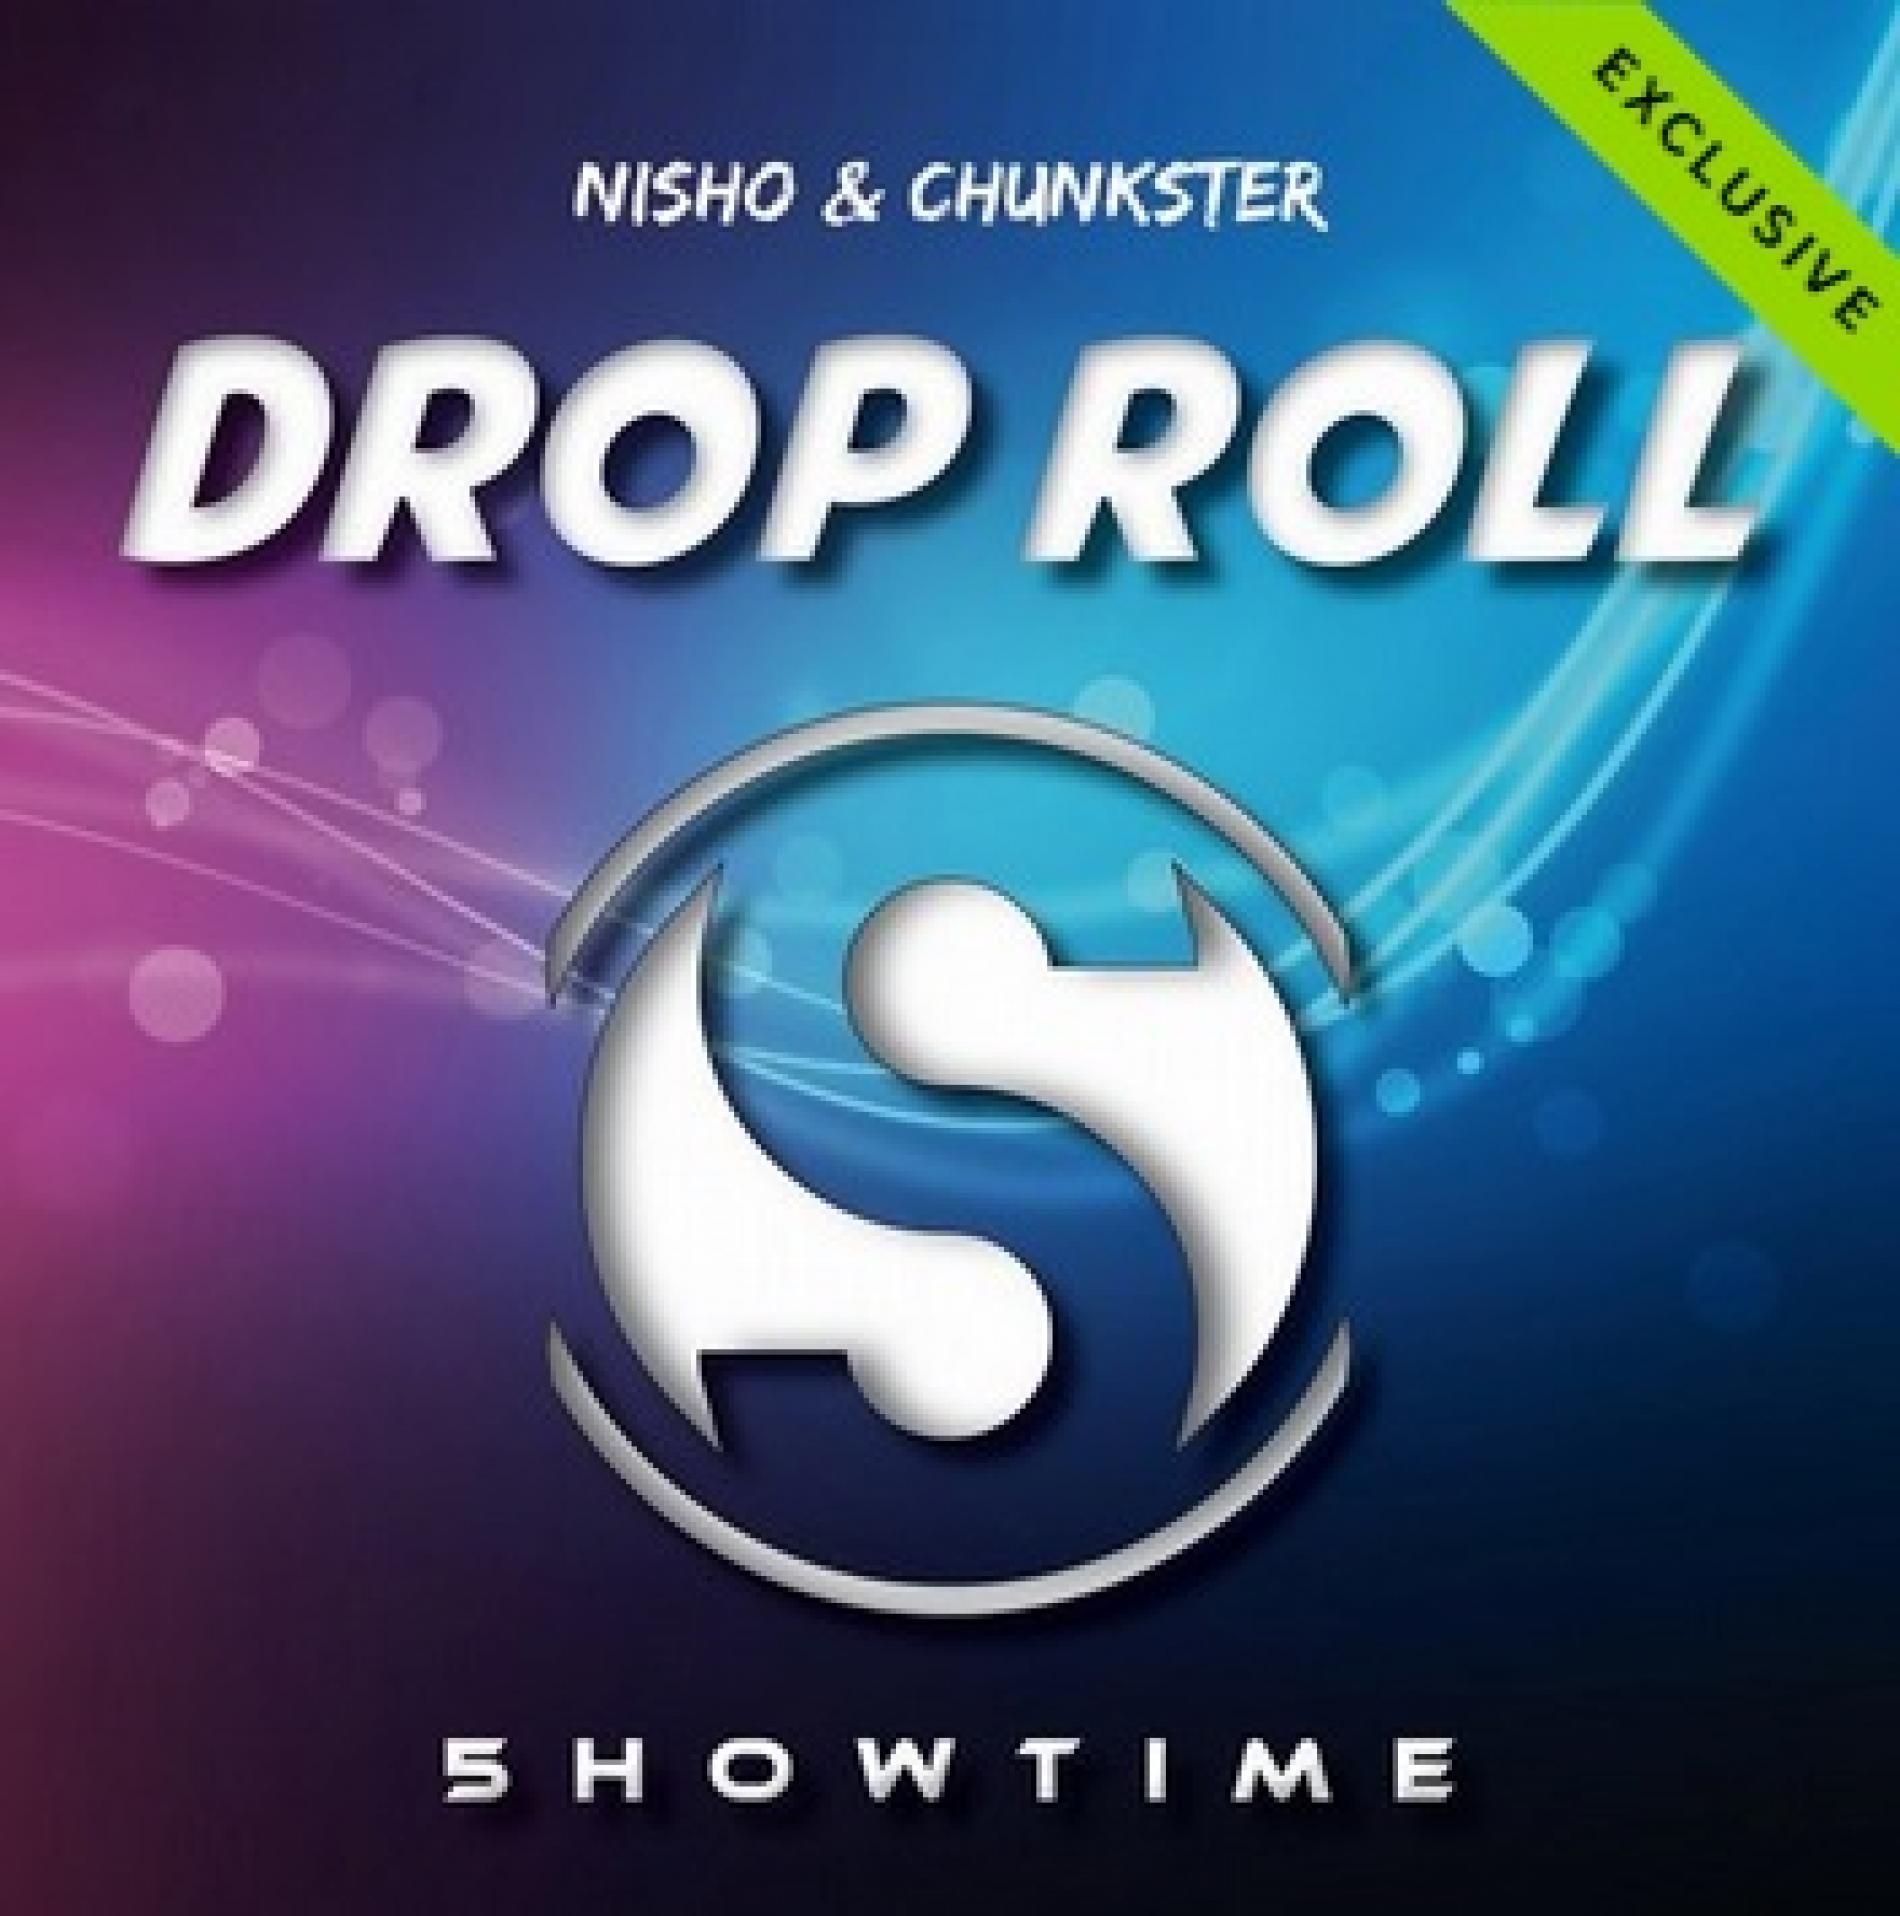 Nisho & Chunkster: Drop Roll